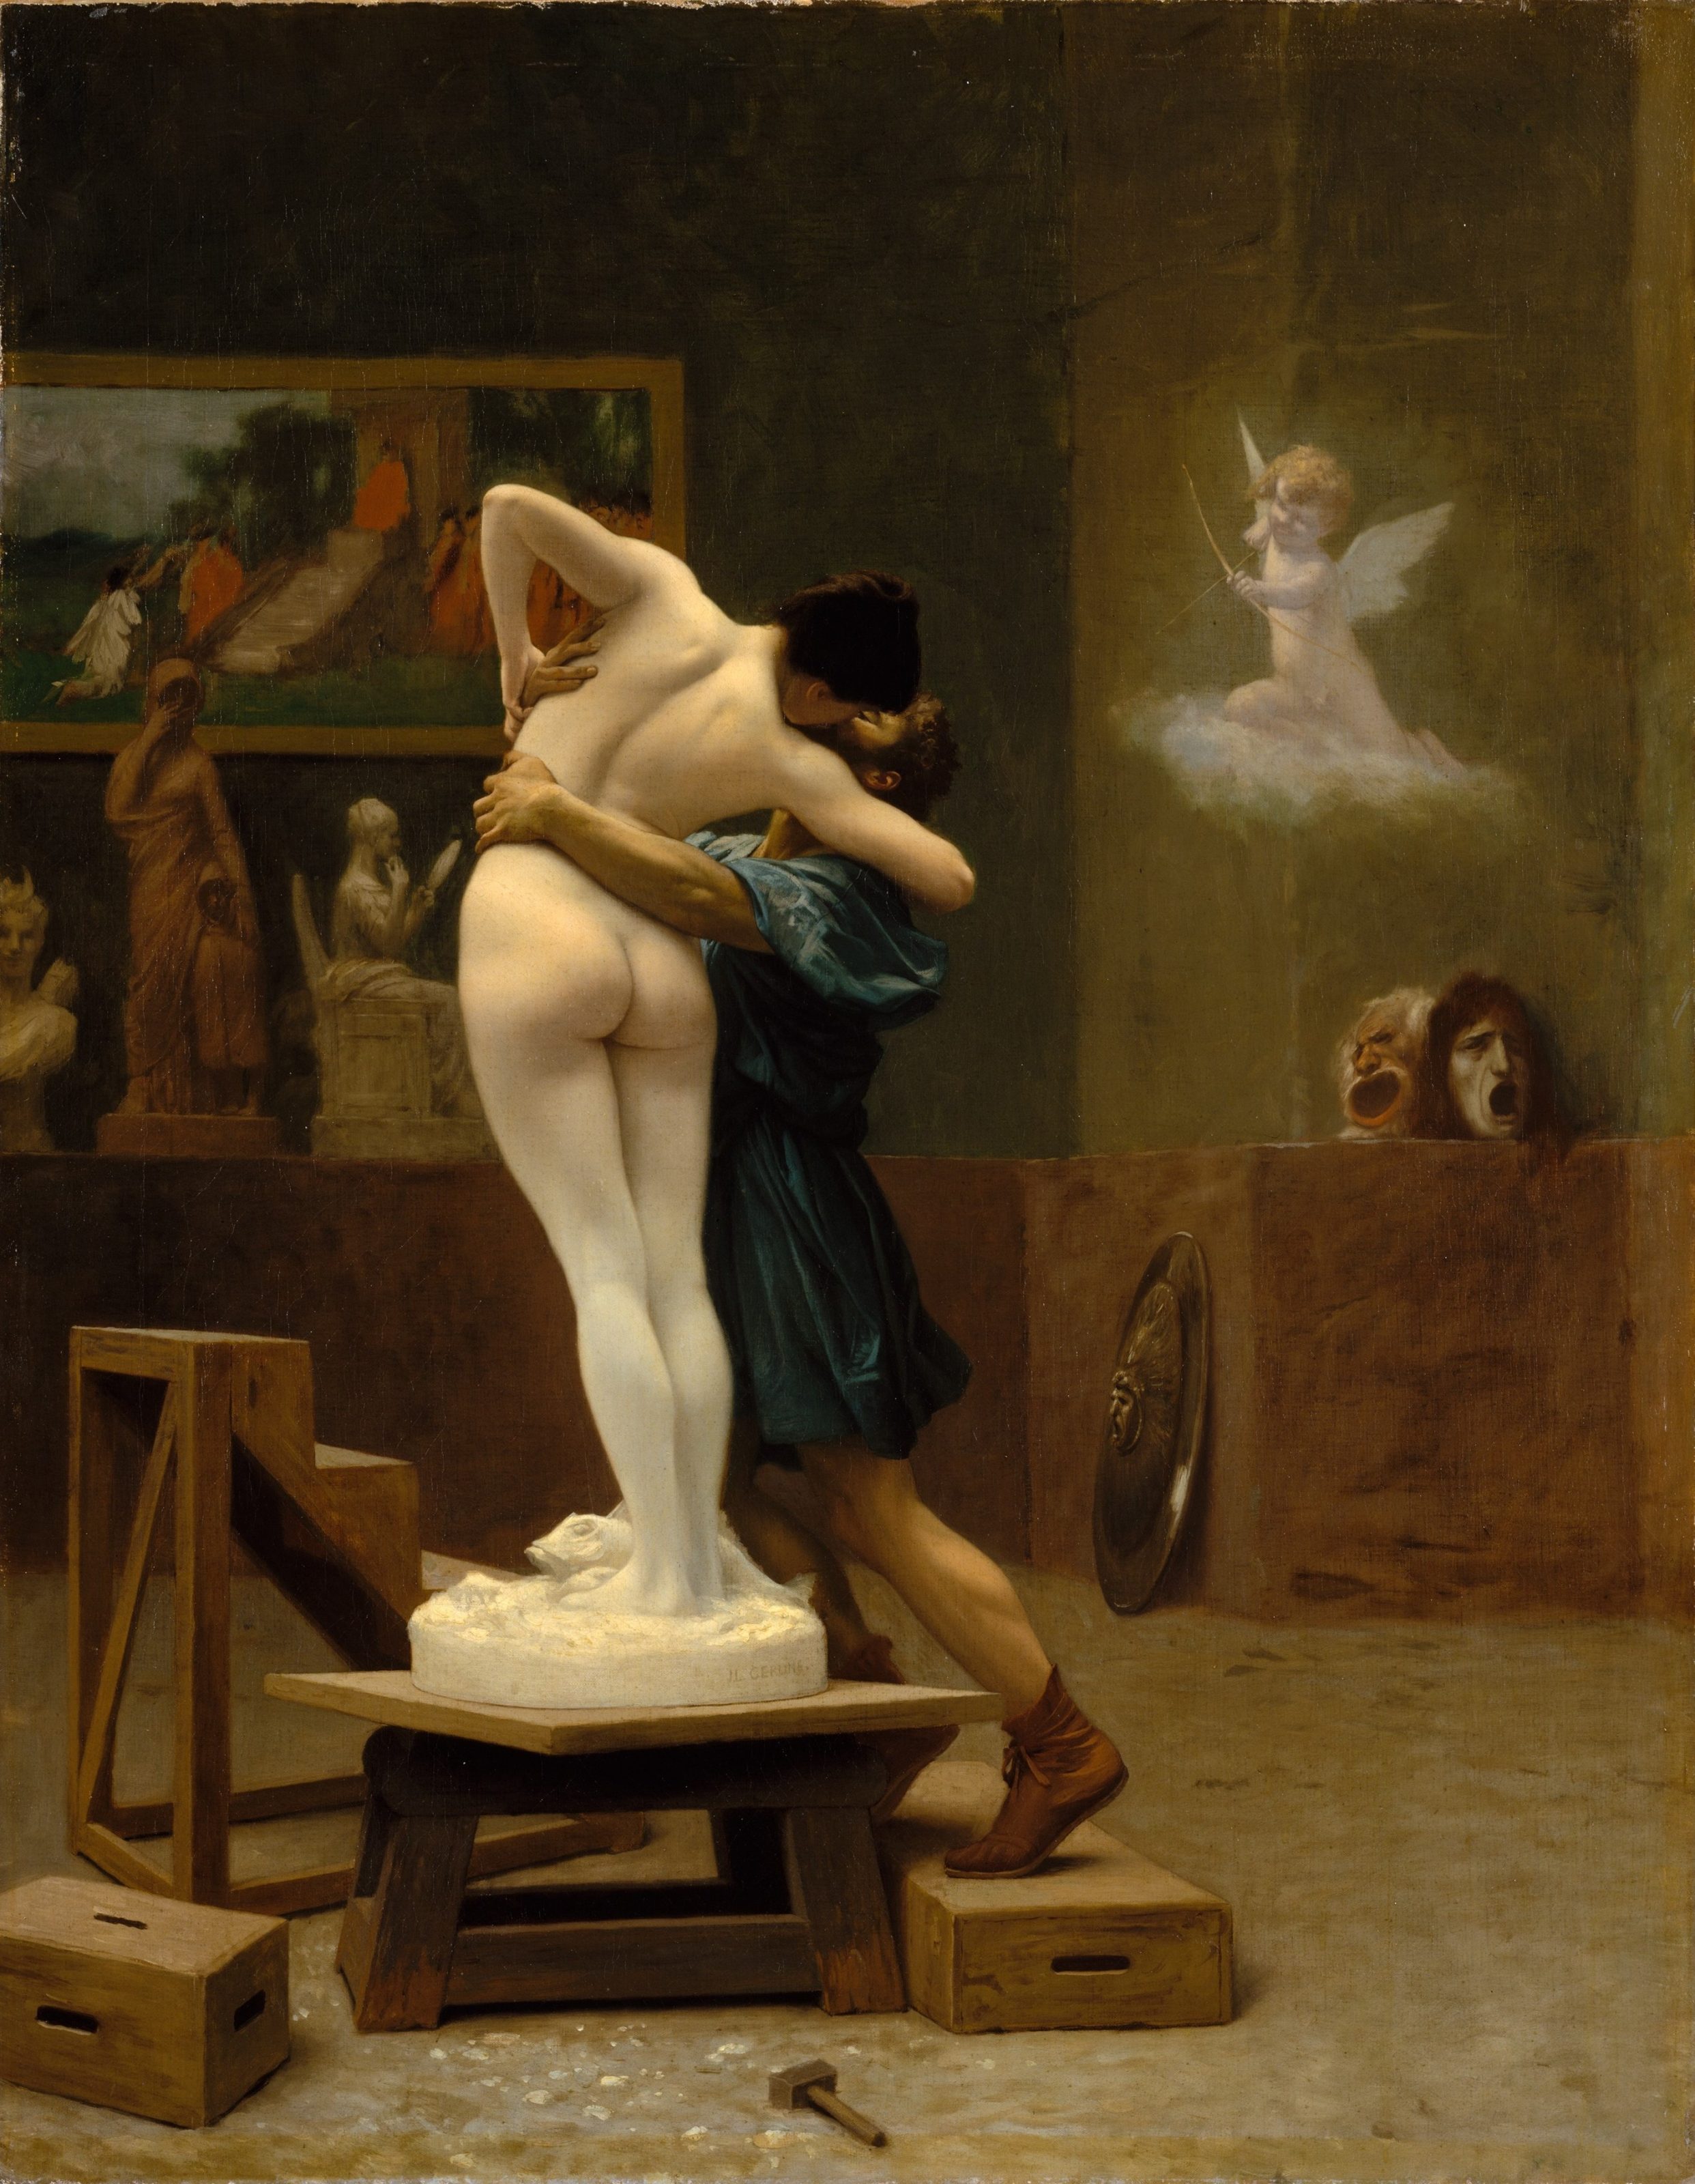 Jean-Léon Gérôme's oil painting Pygmalion and Galatea